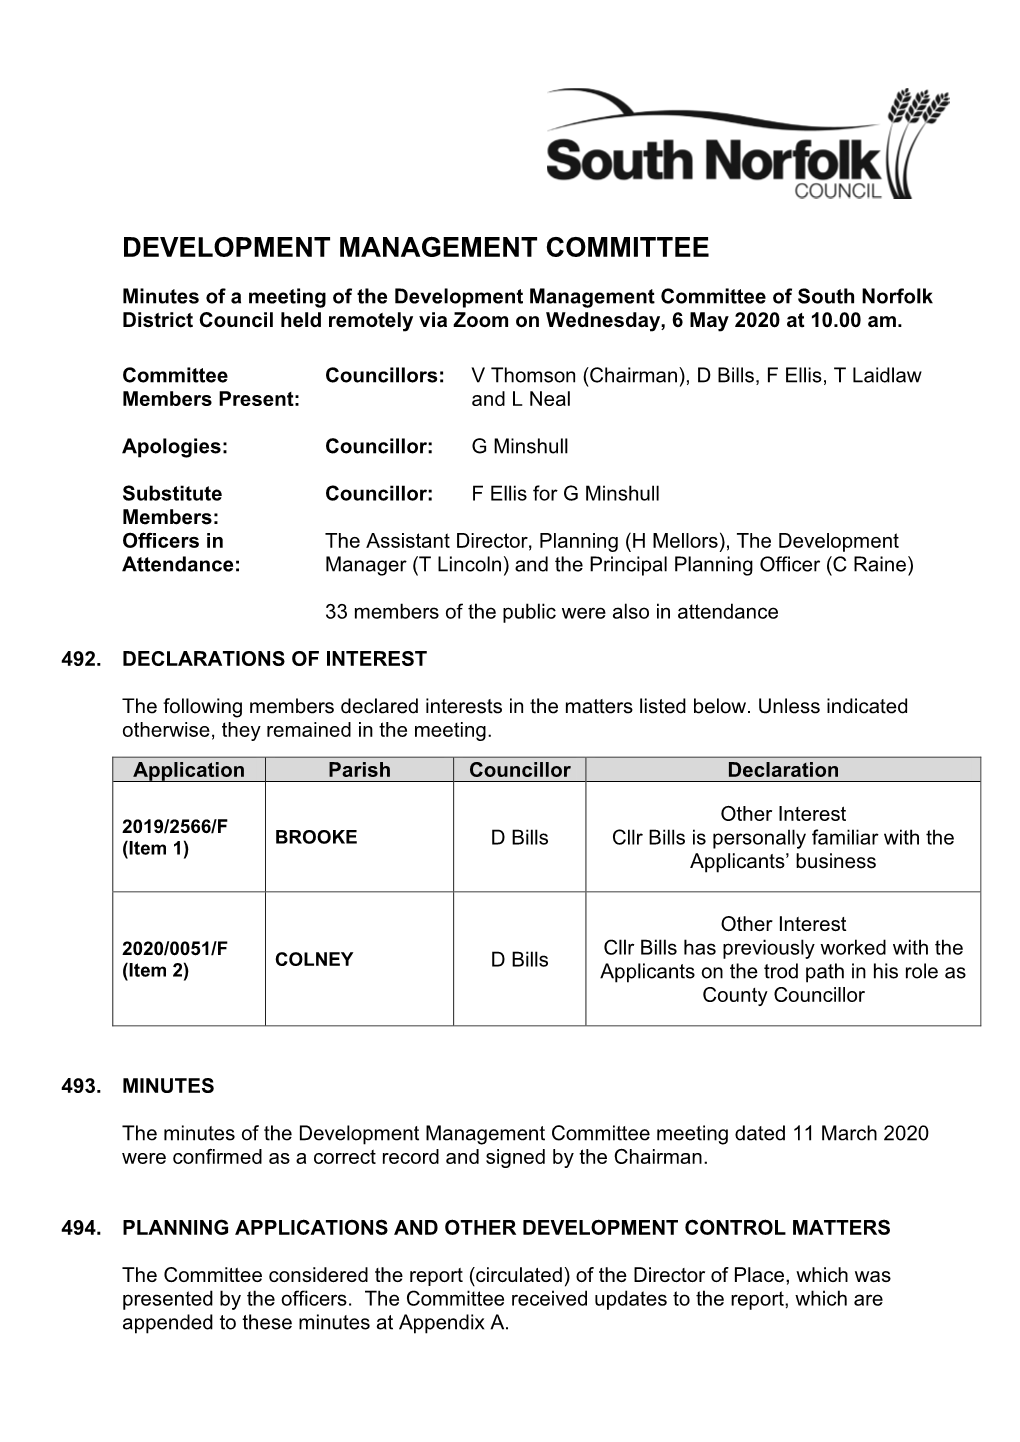 Development Management Committee